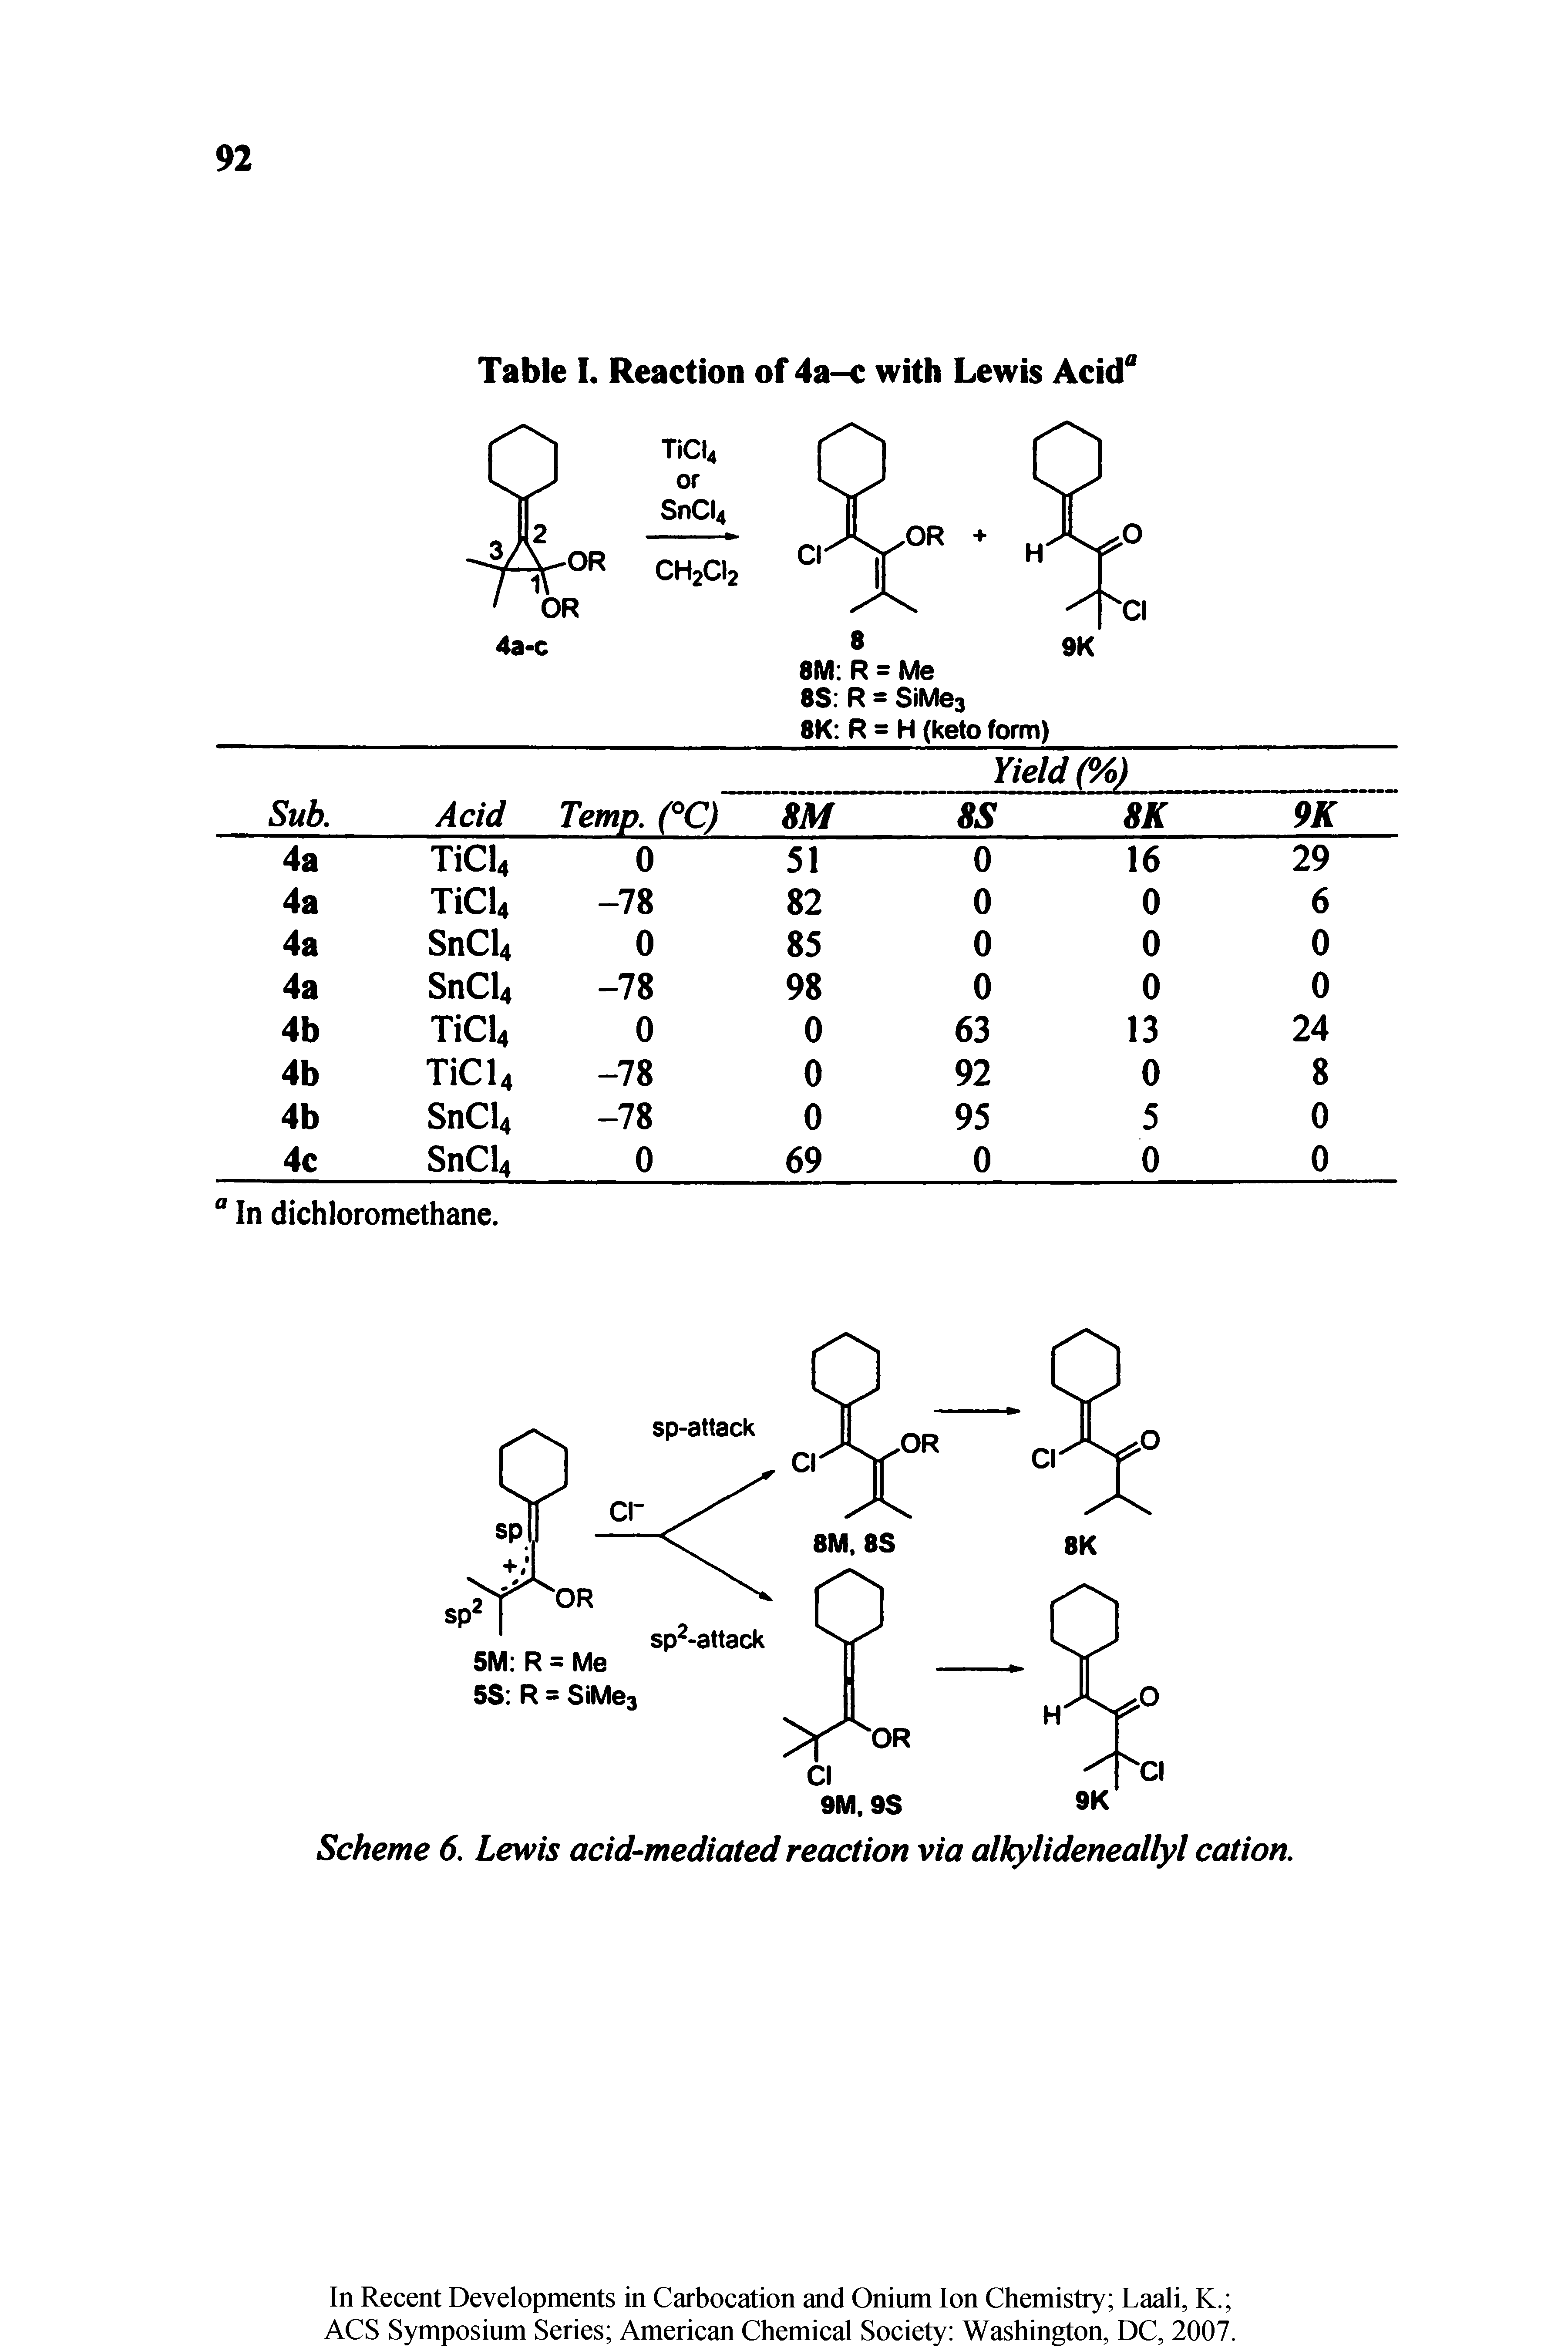 Scheme 6. Lewis acid-mediated reaction via alkylideneallyl cation.